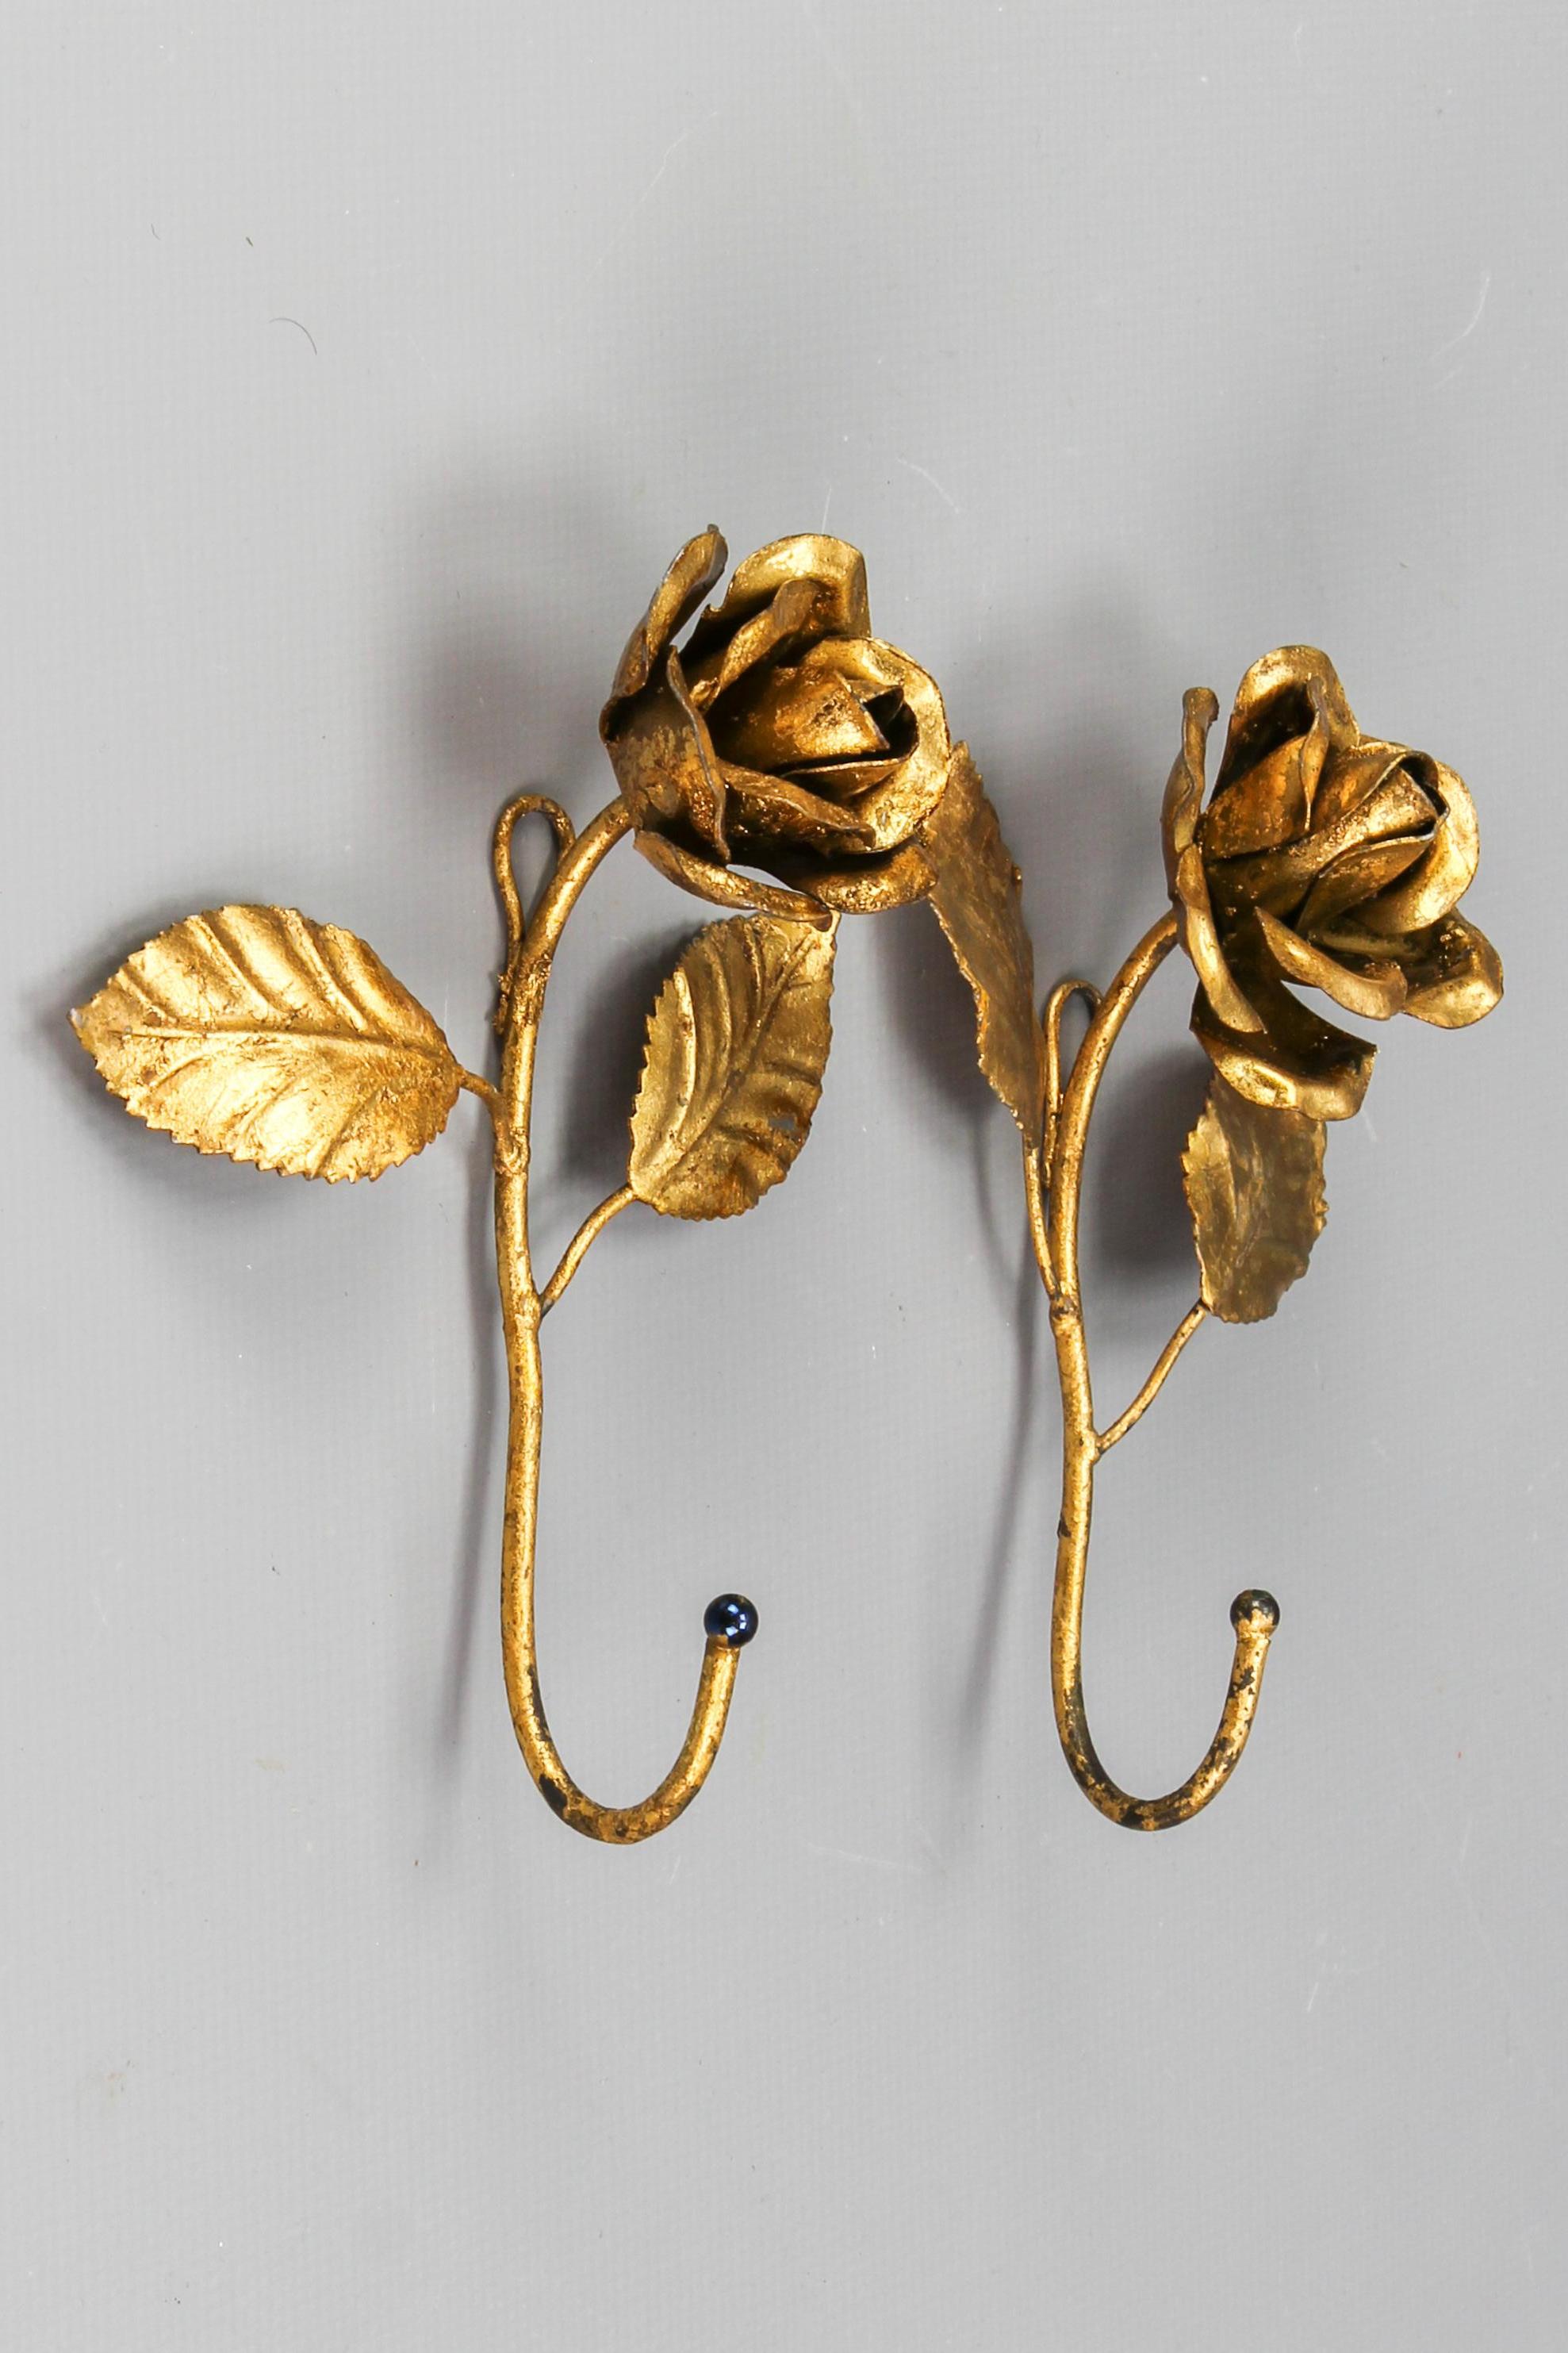 Italian gilt metal rose-shaped coat hooks, a pair, the 1960s
A pair of beautiful Hollywood Regency-style gilt metal coat hooks in the shape of roses.
Dimensions: height: 17 cm / 6.7 in; width: 10 cm / 3.93 in; depth: 4.5 cm / 1.77 in.
In good